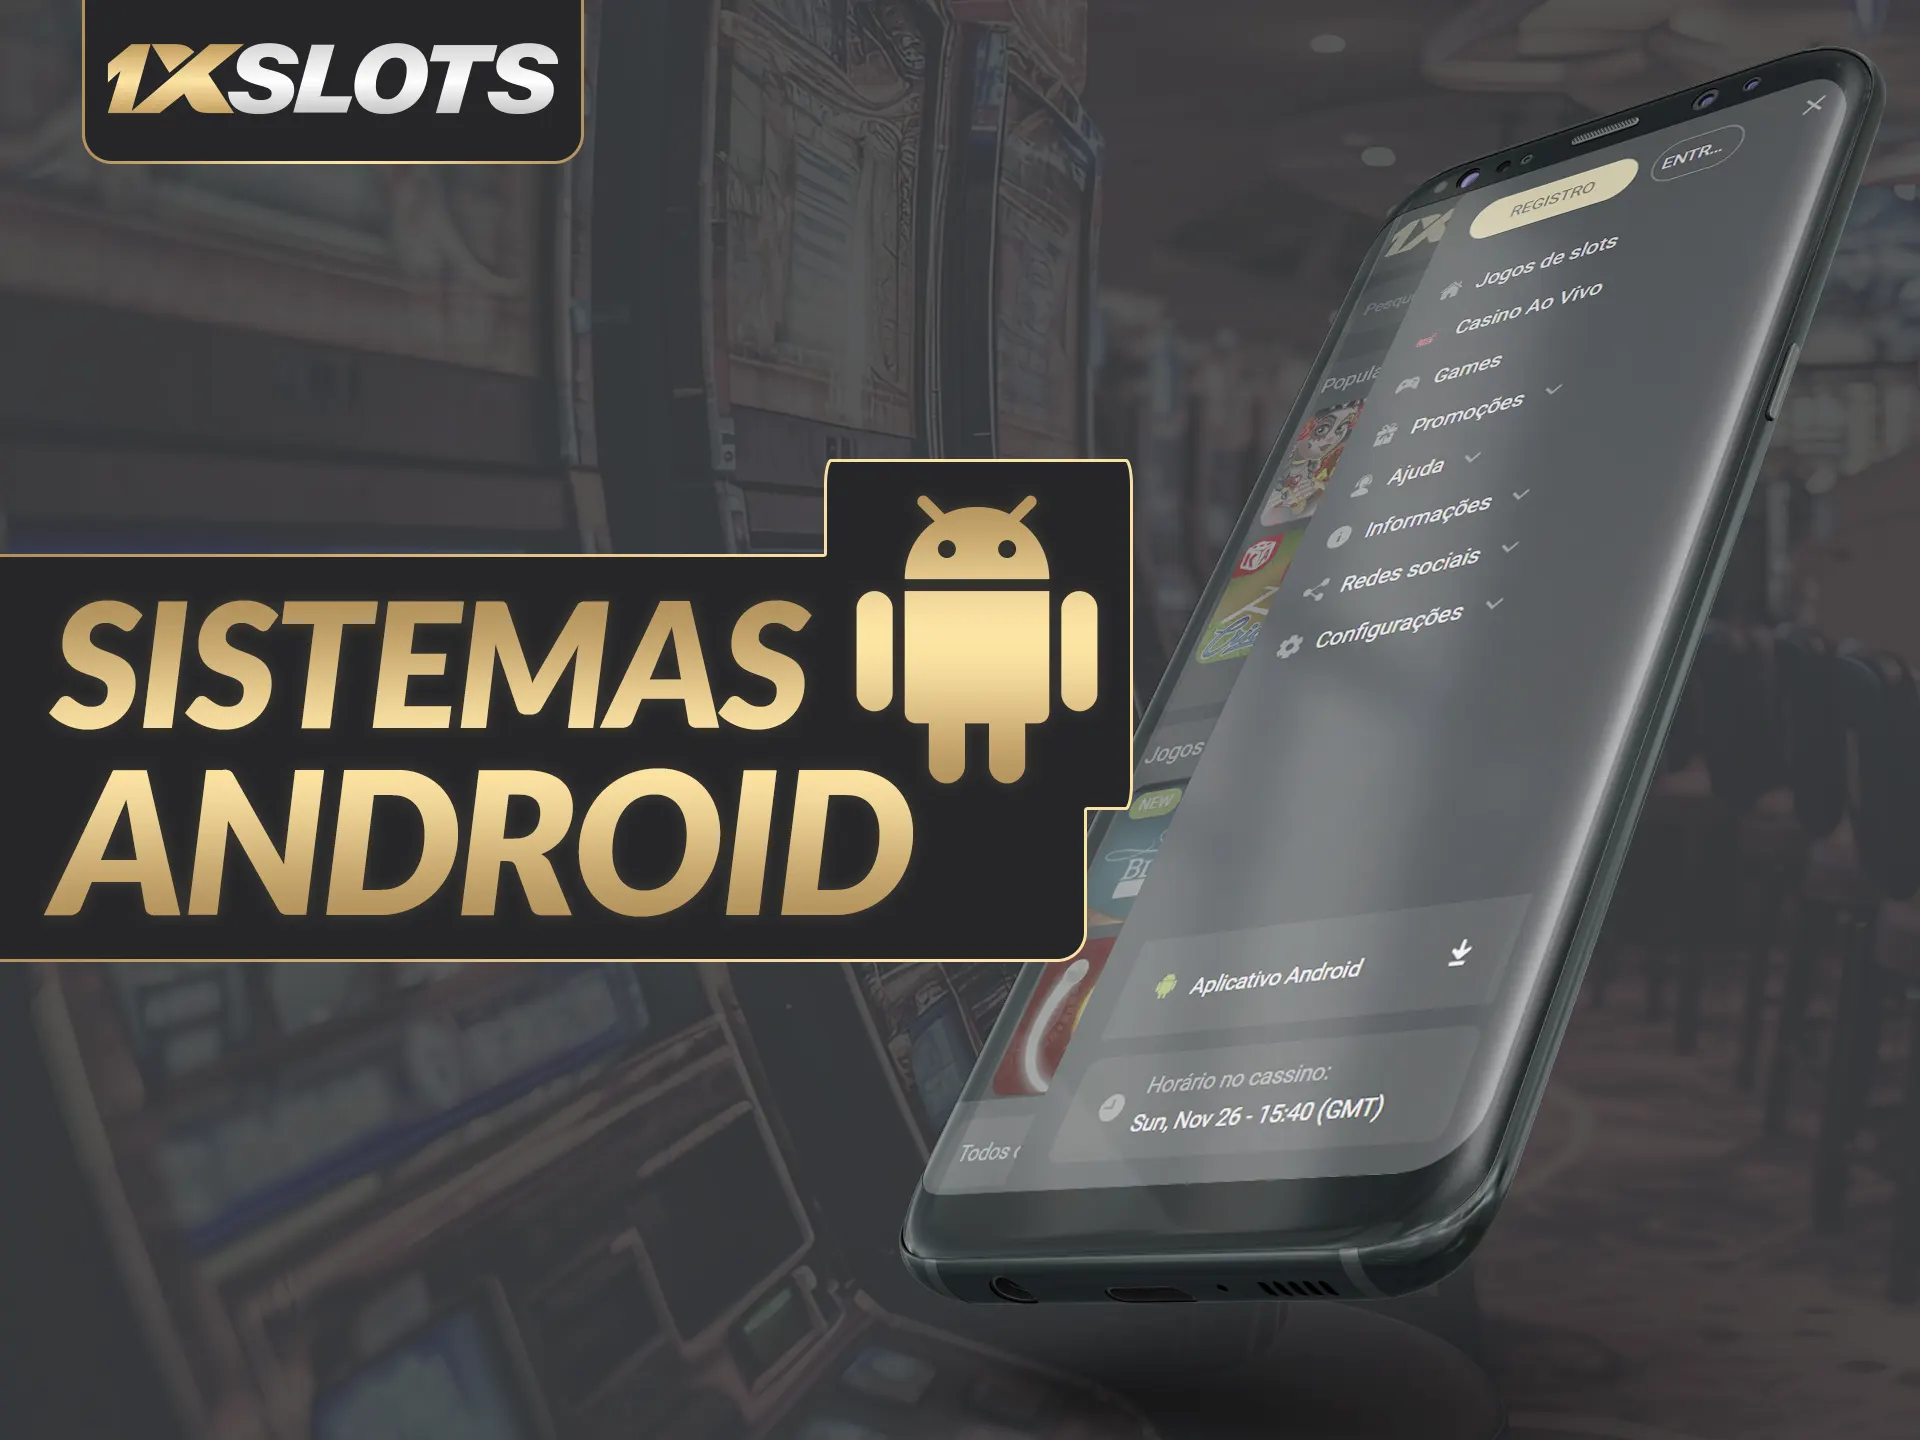 Descubra como baixar e aproveitar o 1xSlots mobile casino no aplicativo Android.